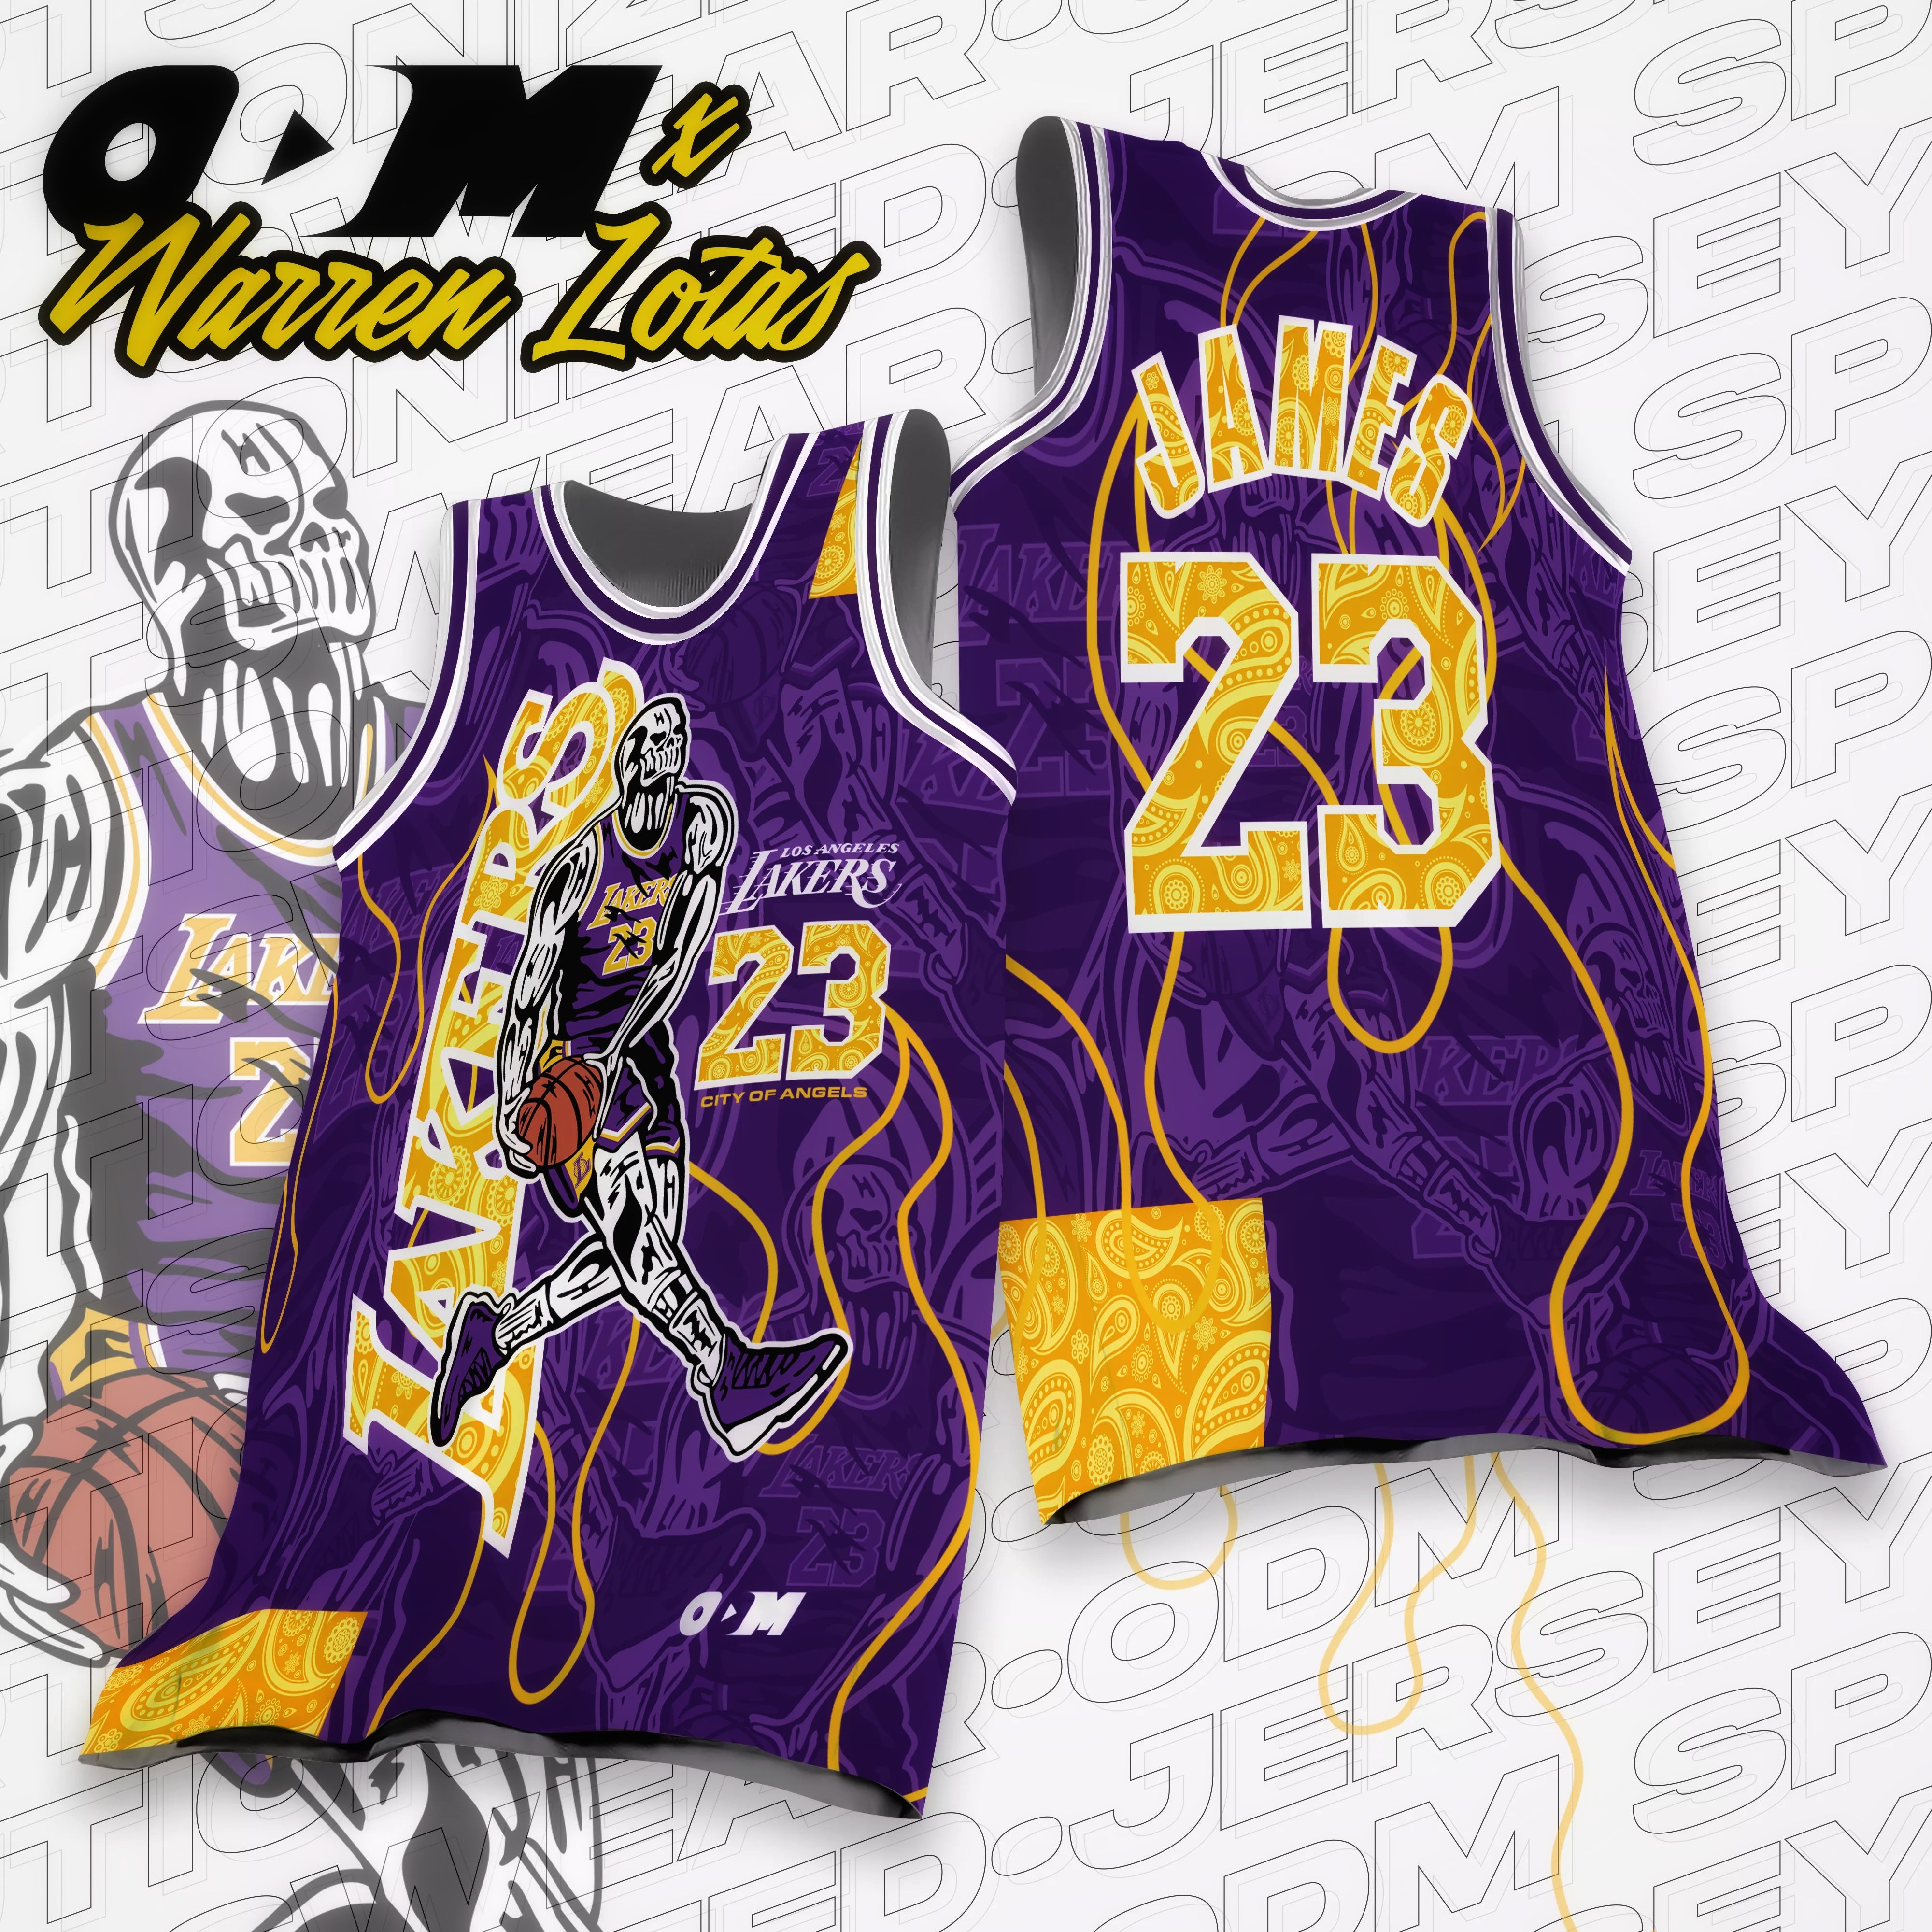 LeBron Lakers x Warren Lotas inspired jersey